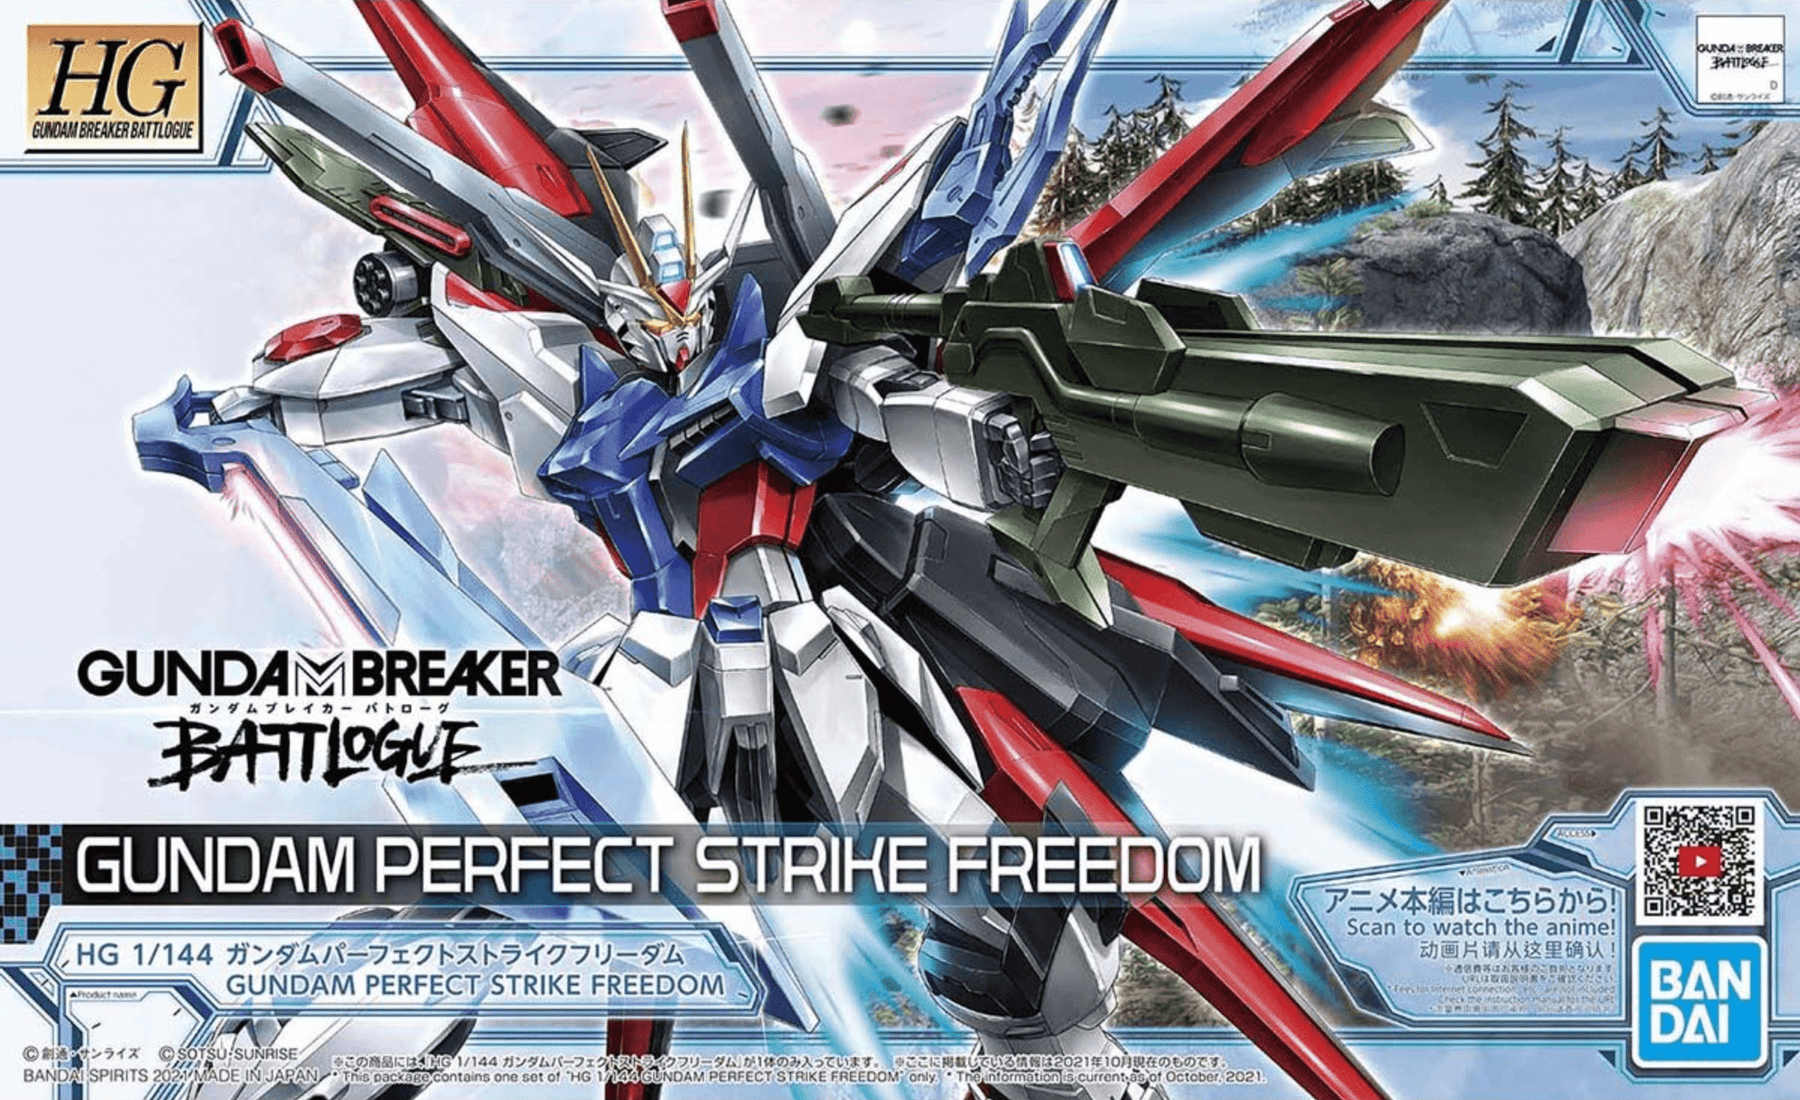 Bandai: Gundam HG Breaker Battlogue - Gundam Perfect Strike Freedom - Third Eye